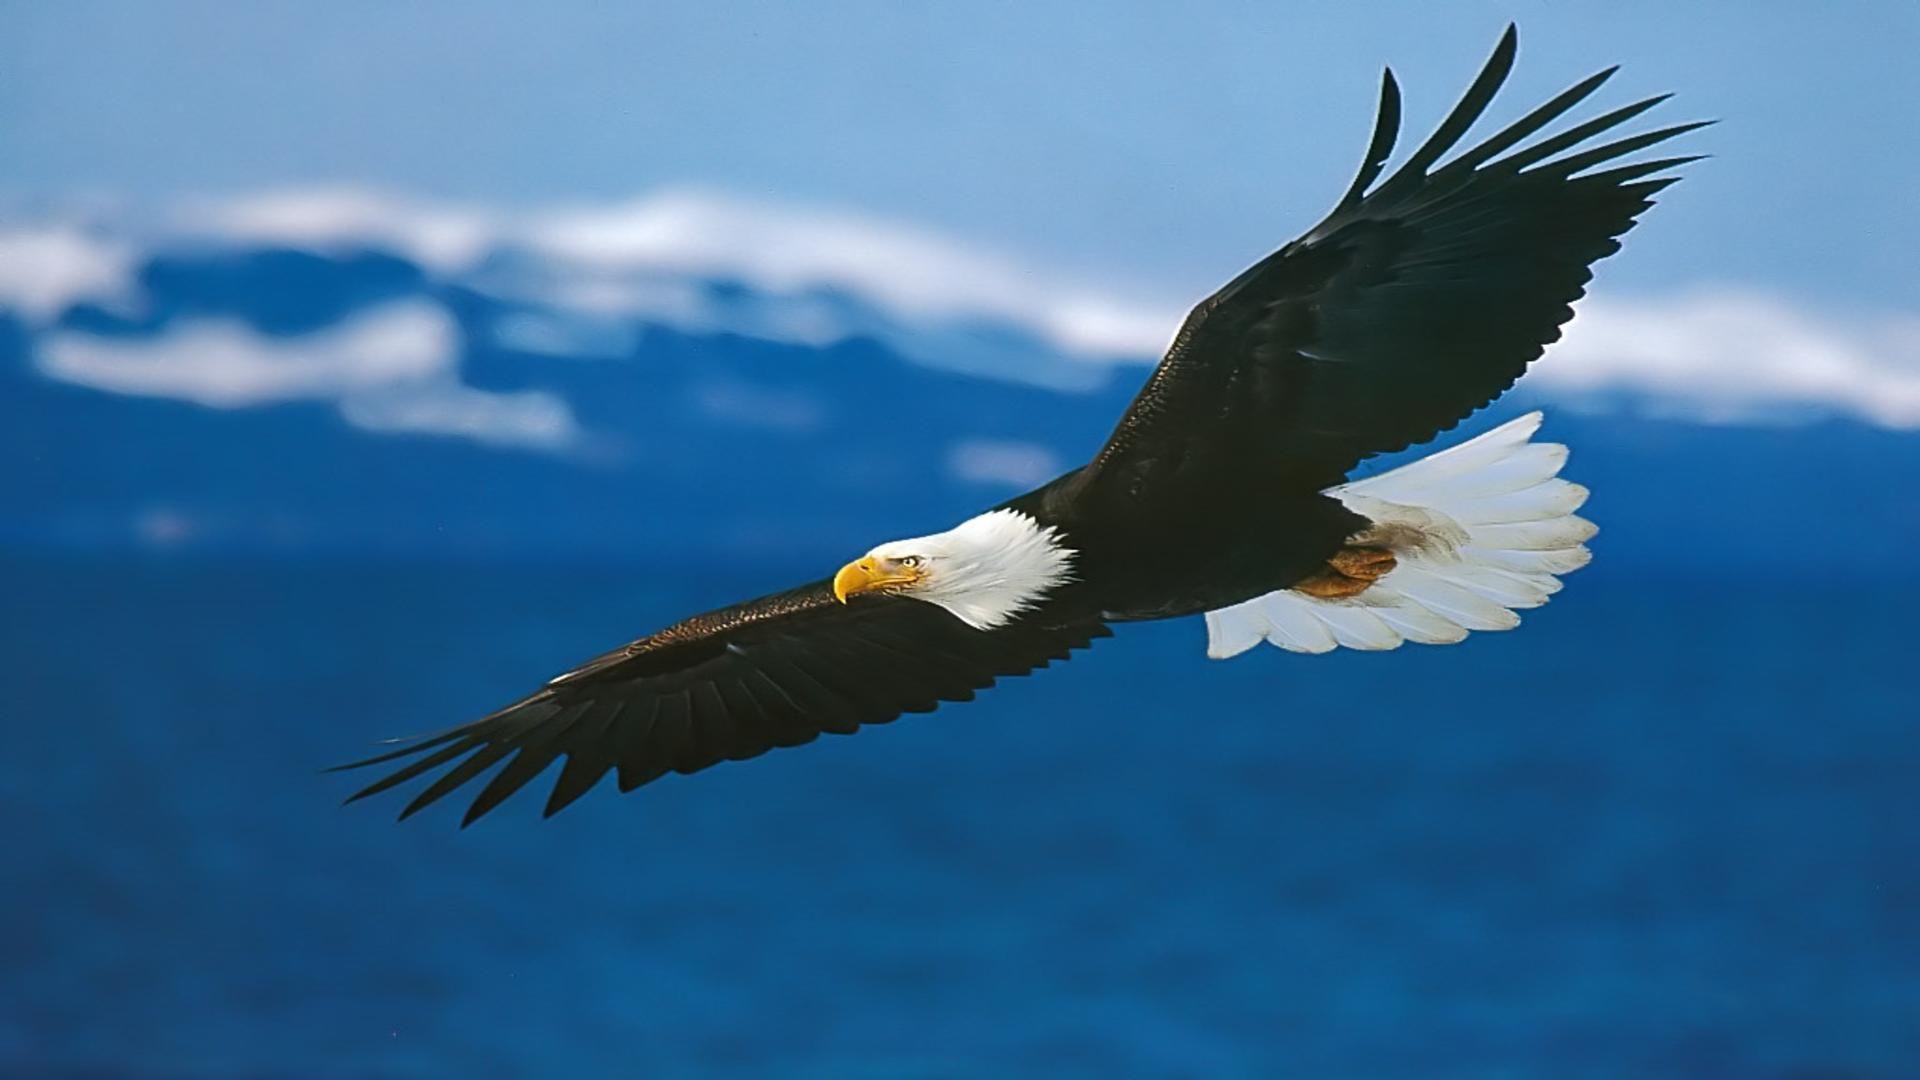 Eagle over mountains free desktop background wallpaper image